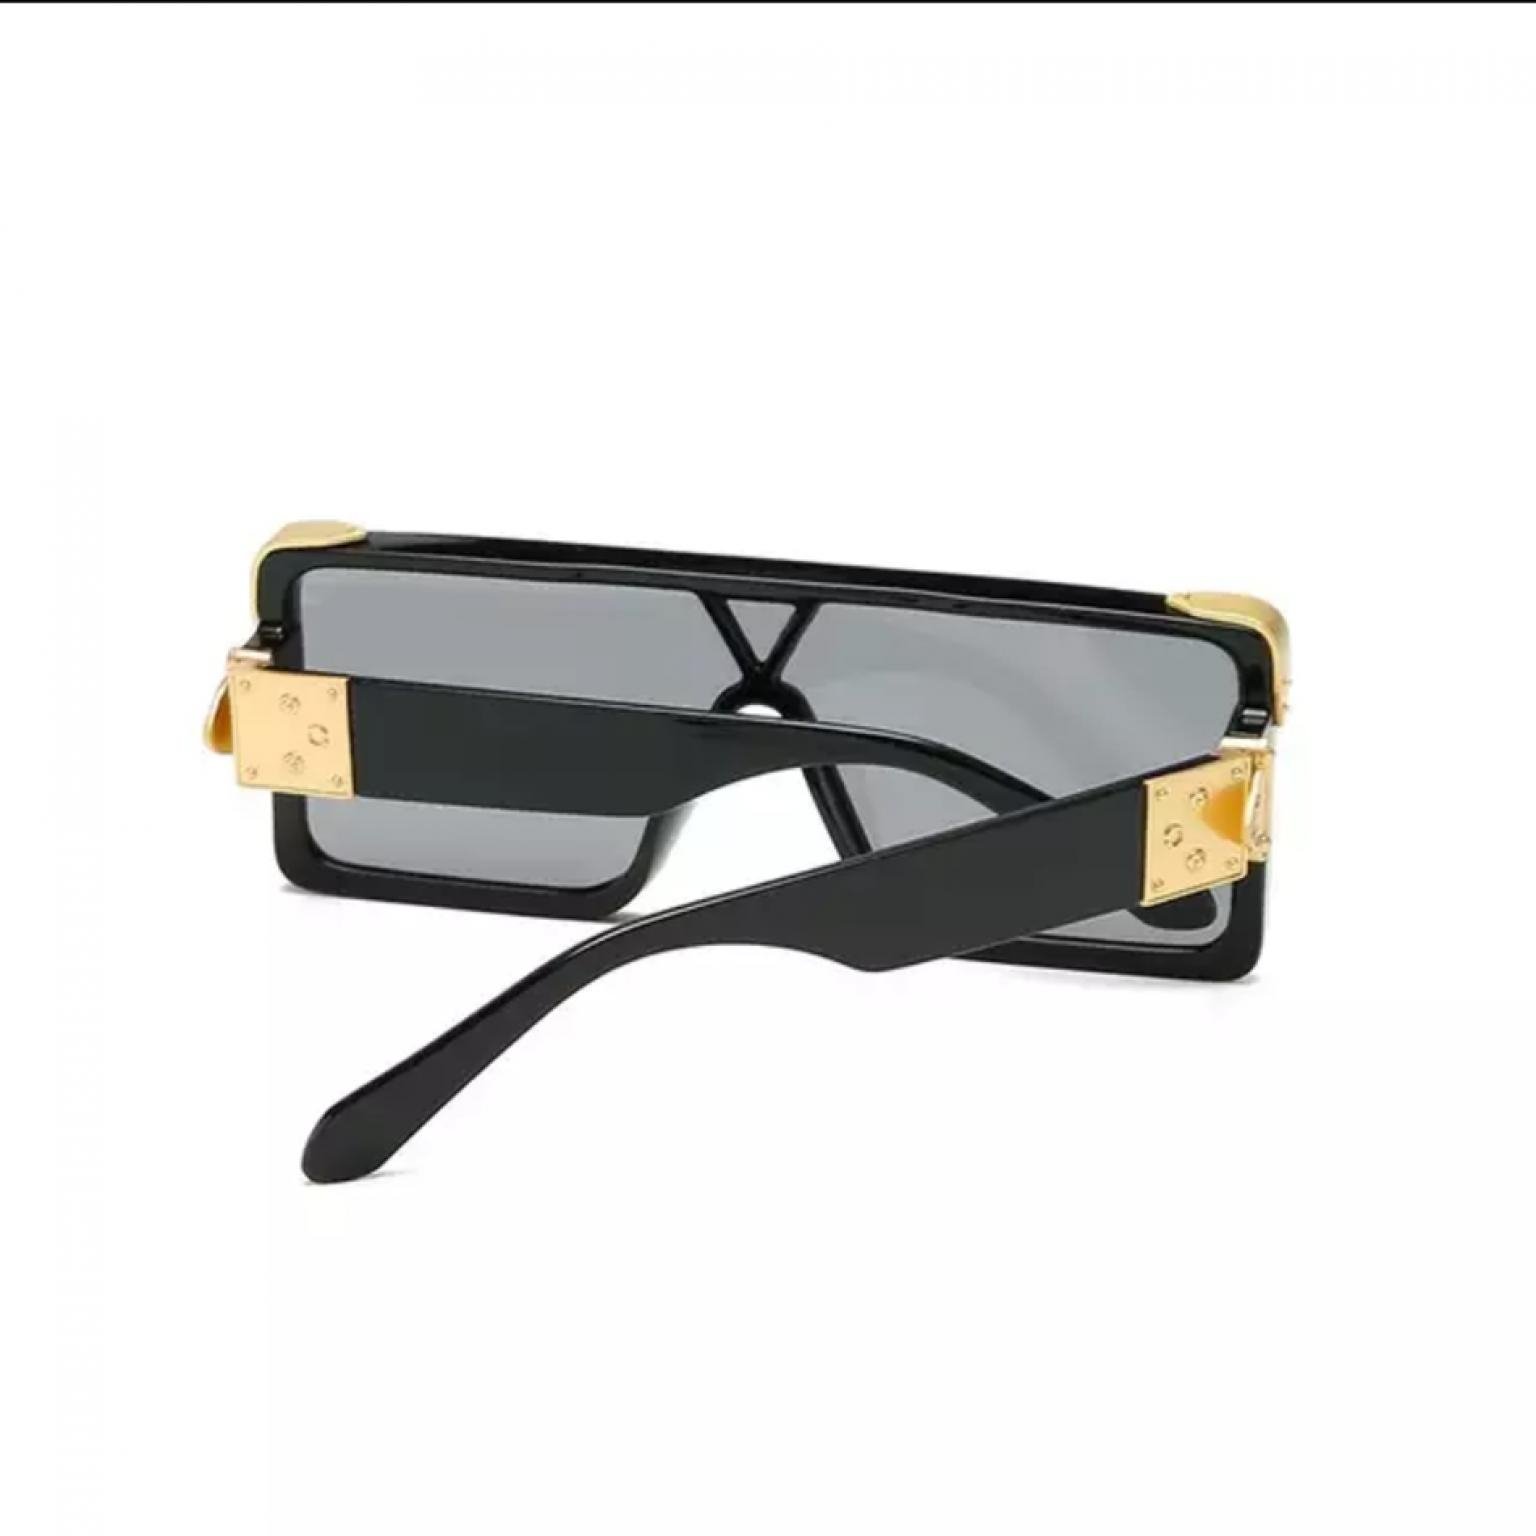 GIFANSEE Original Brand oversized square sunglasses men women retro sun glasses luxury brand vintage designer uv400 eyewear